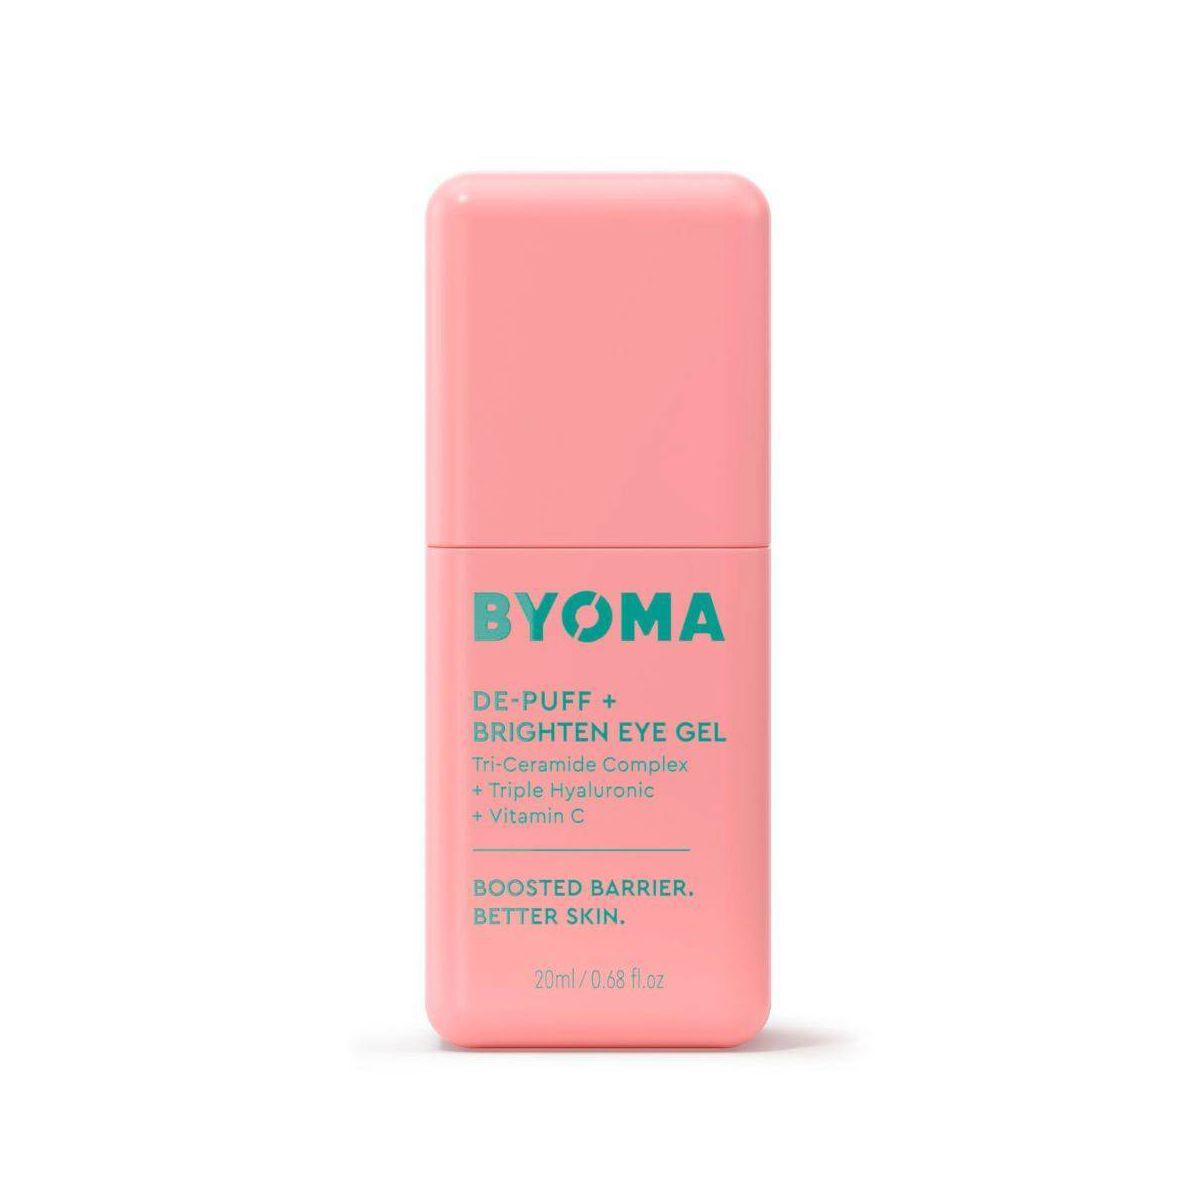 BYOMA De-Puff and Brightening Eye Gel - 0.68 fl oz | Target